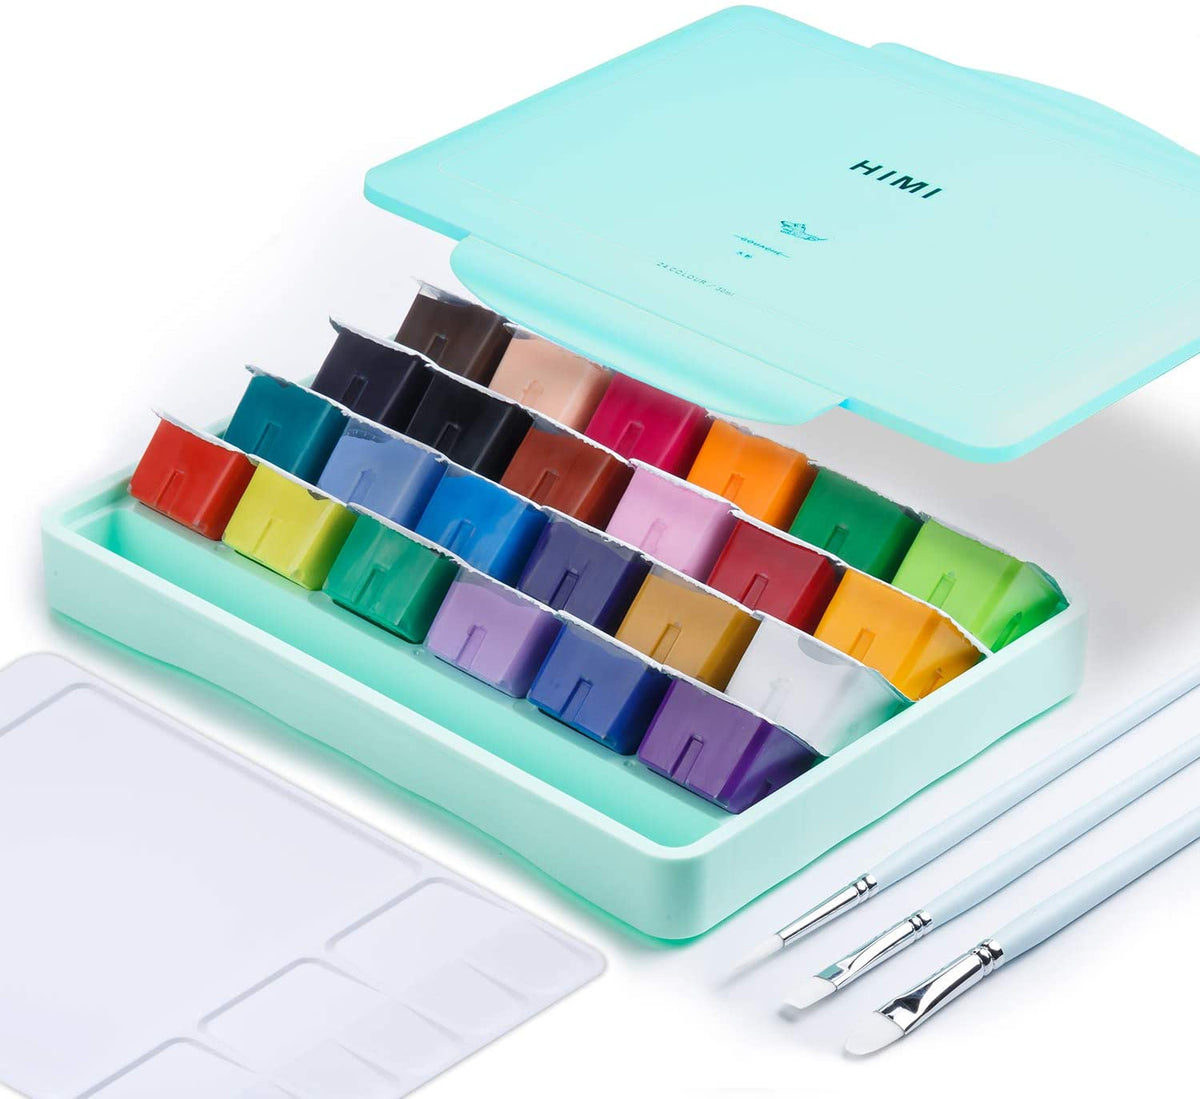 Himi Jelly Gouache Paint Set гуашь 30ml 18/24 Colors Professional